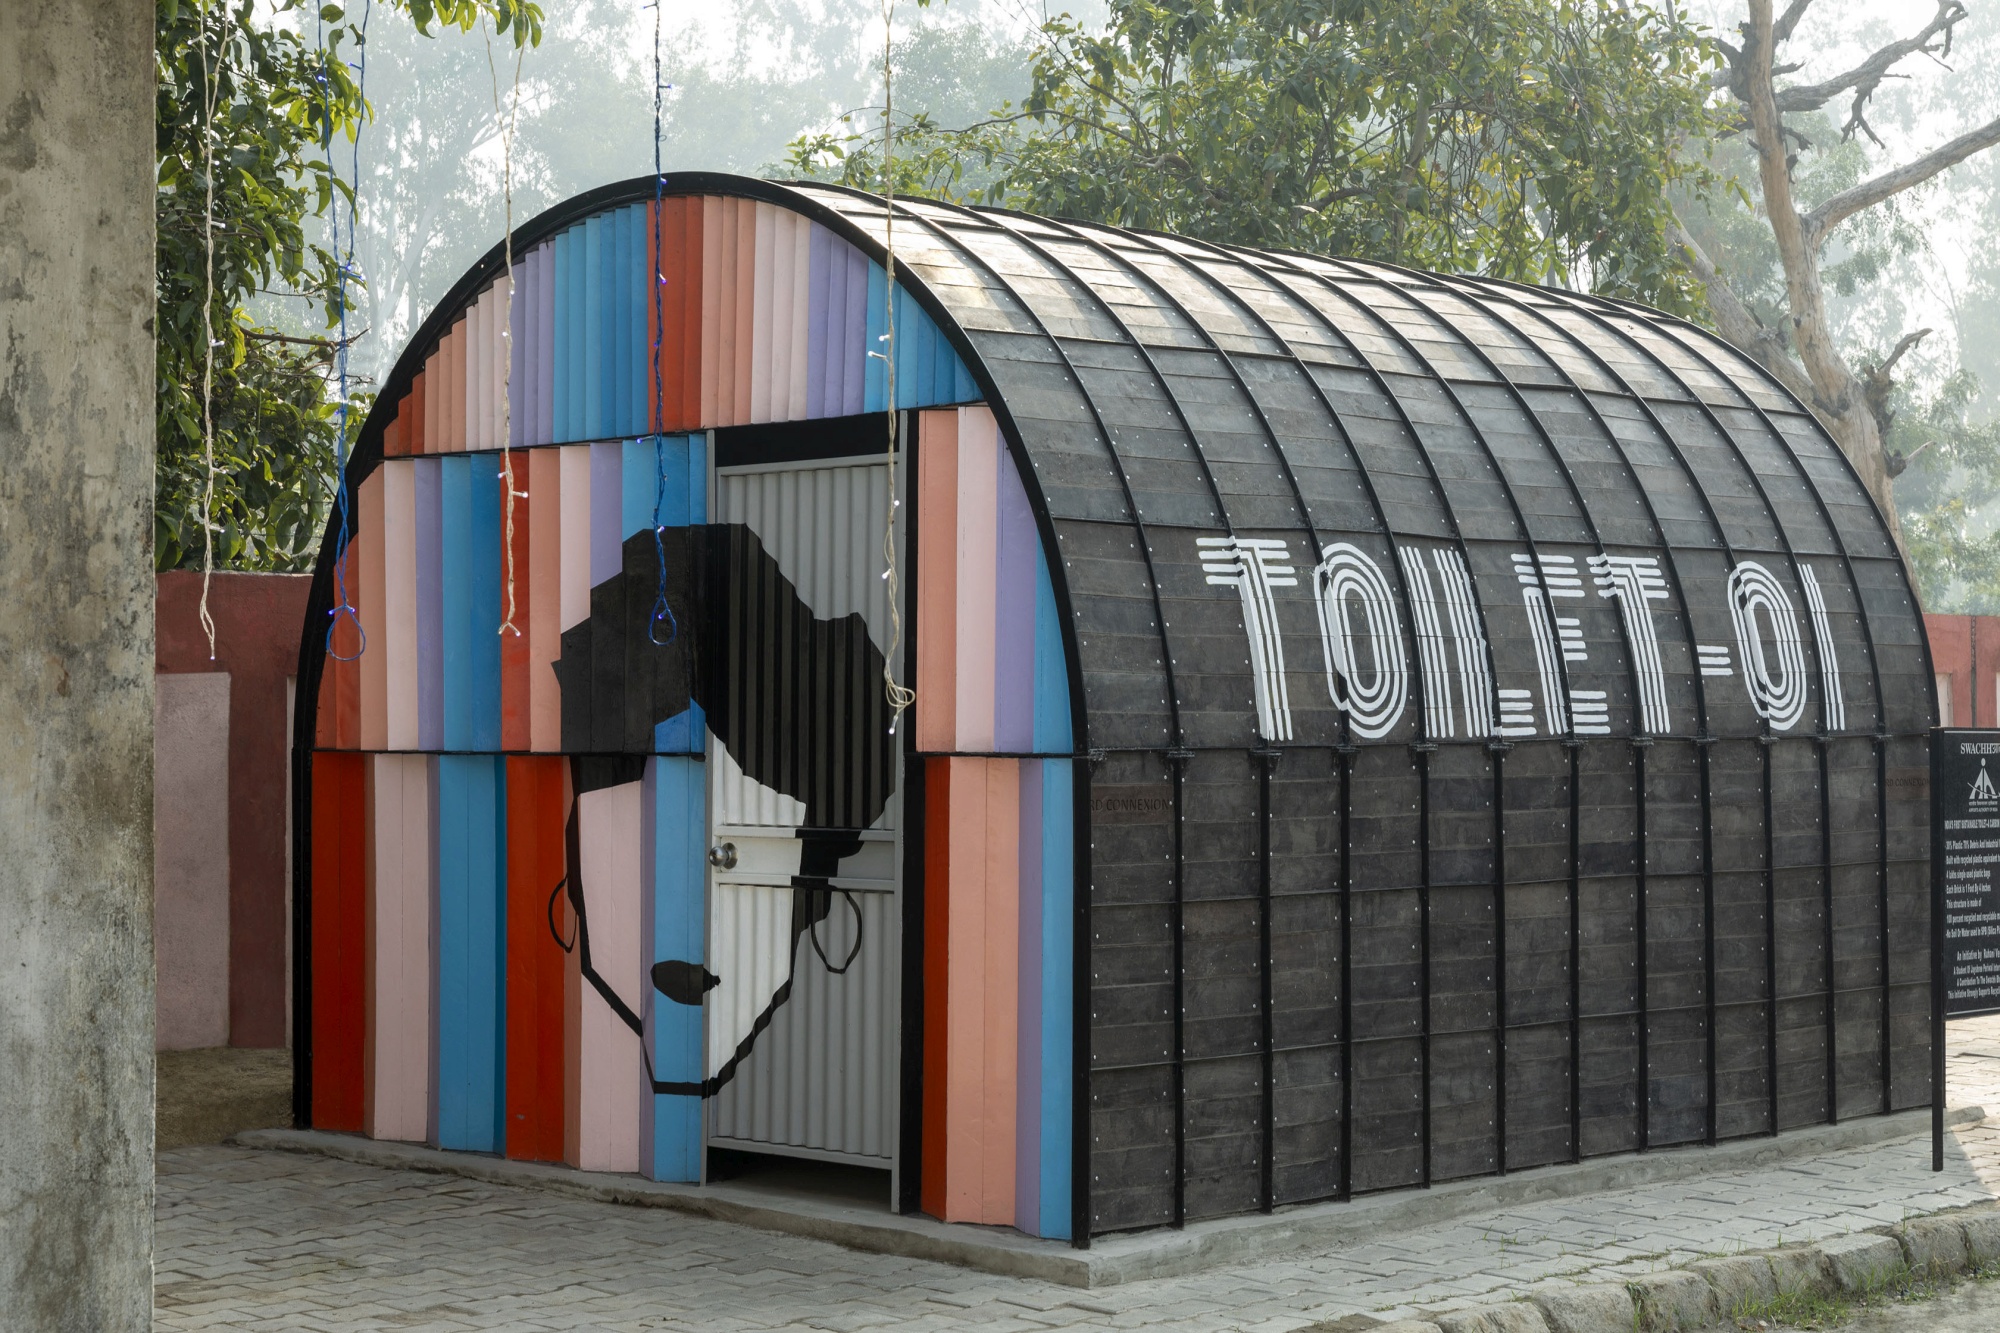 Toilet 001, Amritsar, by R+D Studio